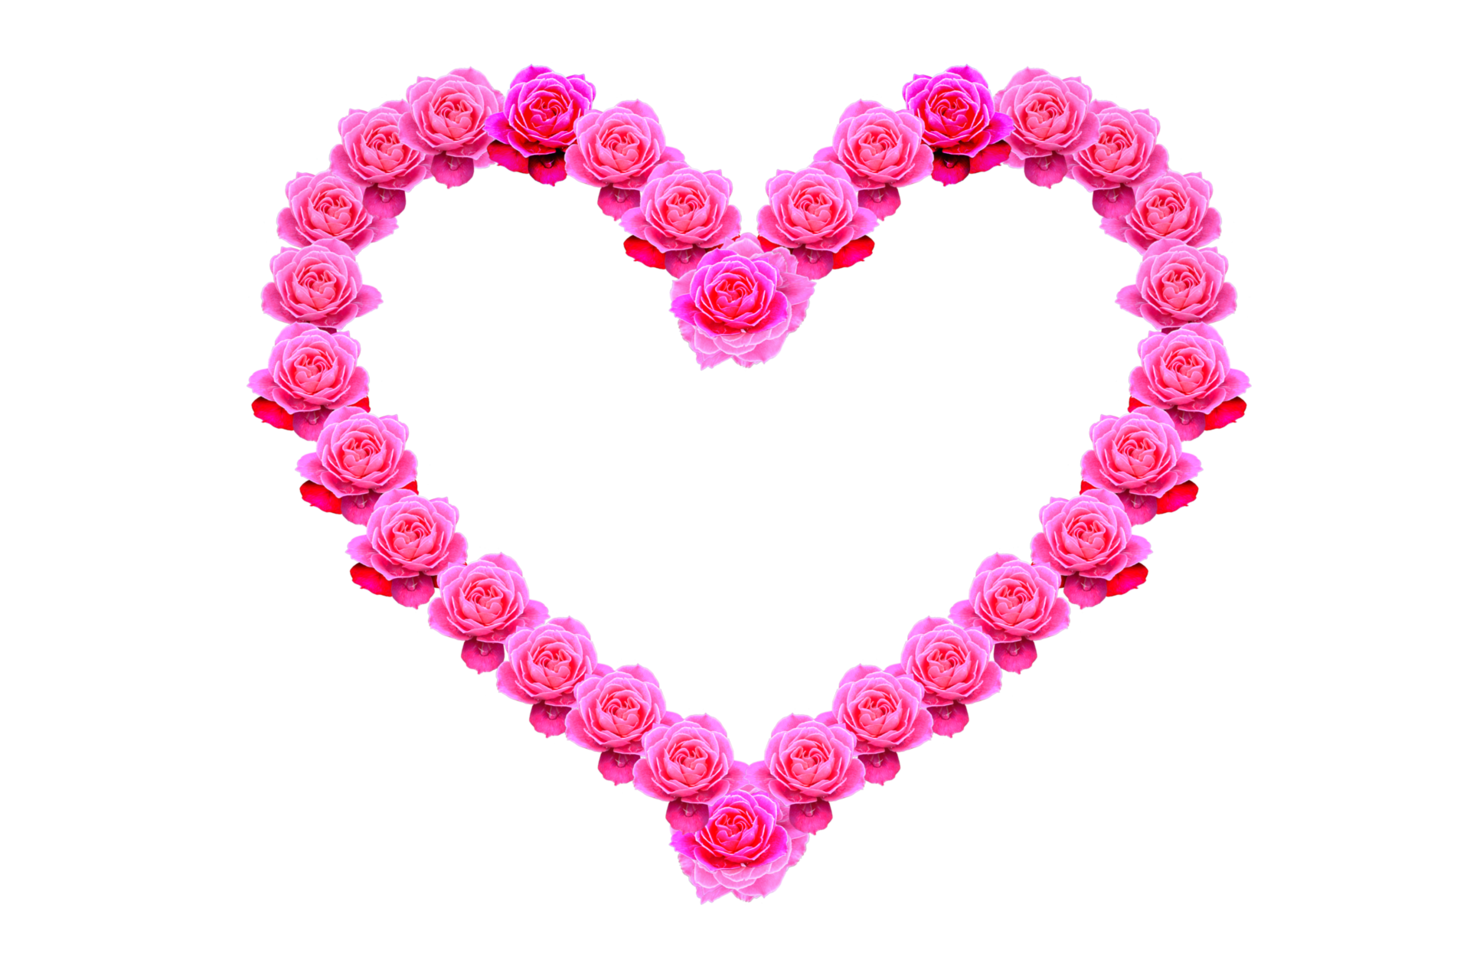 decoration color pink for love element png